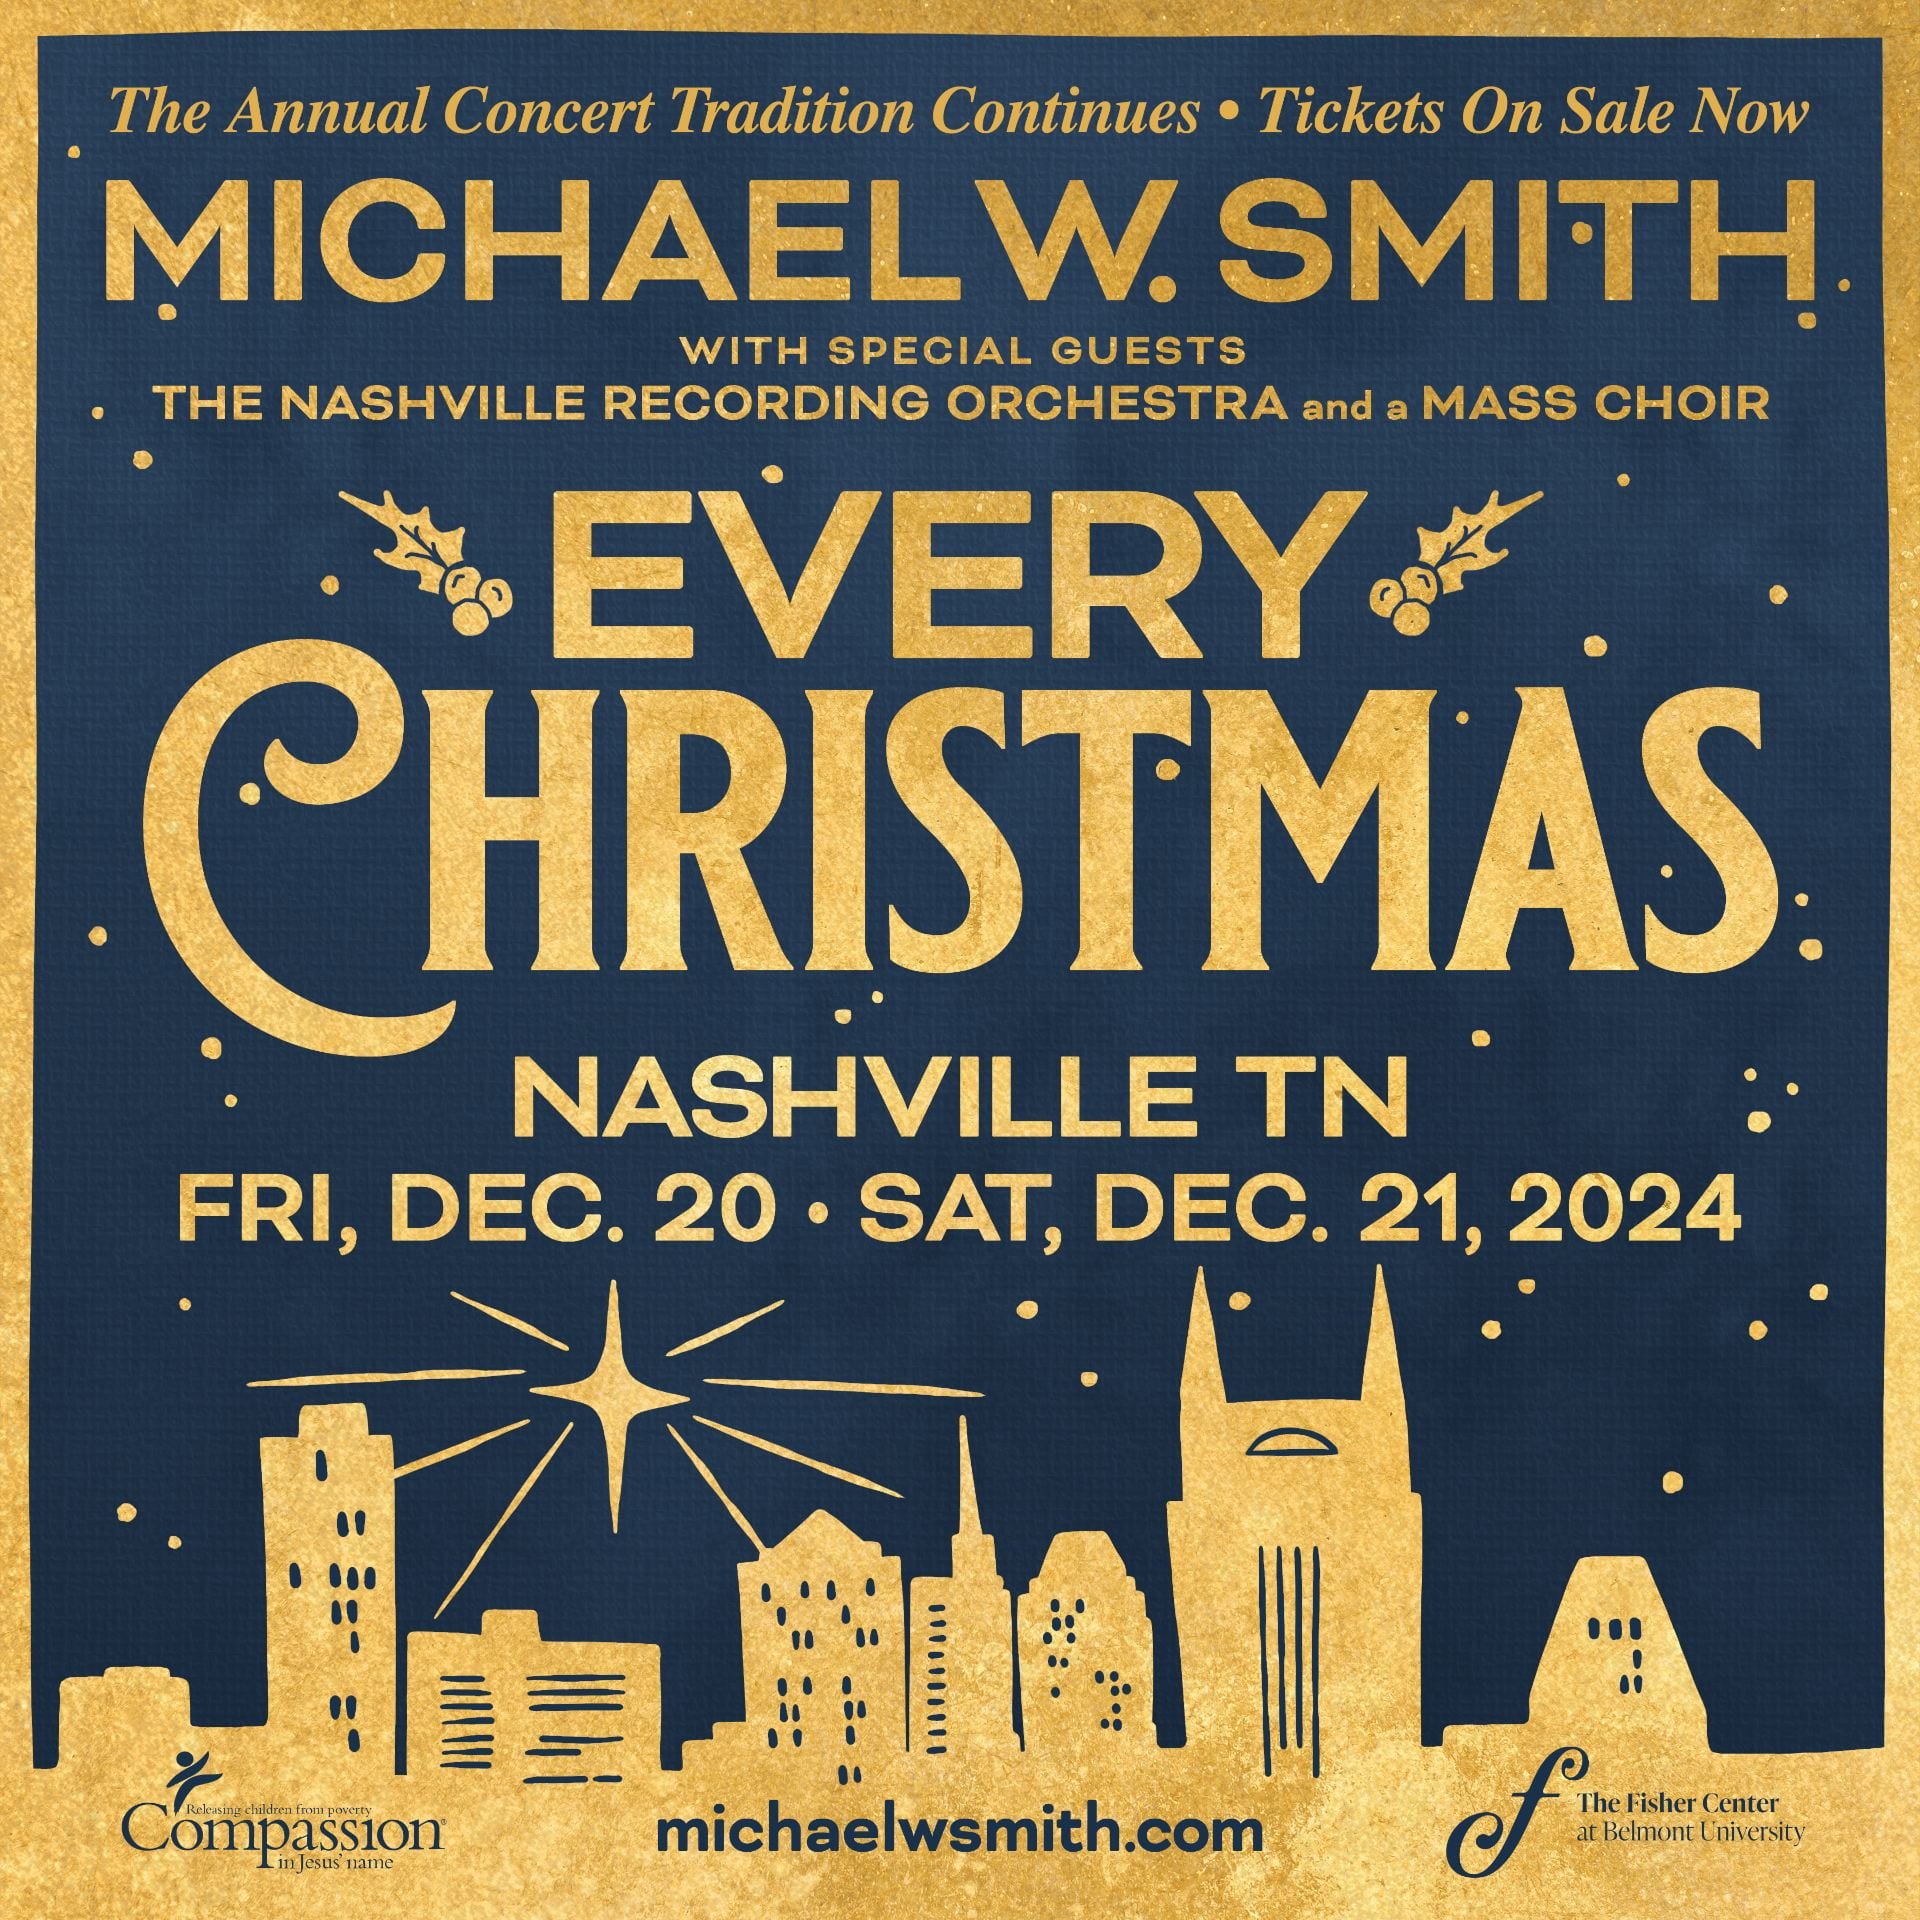 Michael W. Smith's Every Christmas